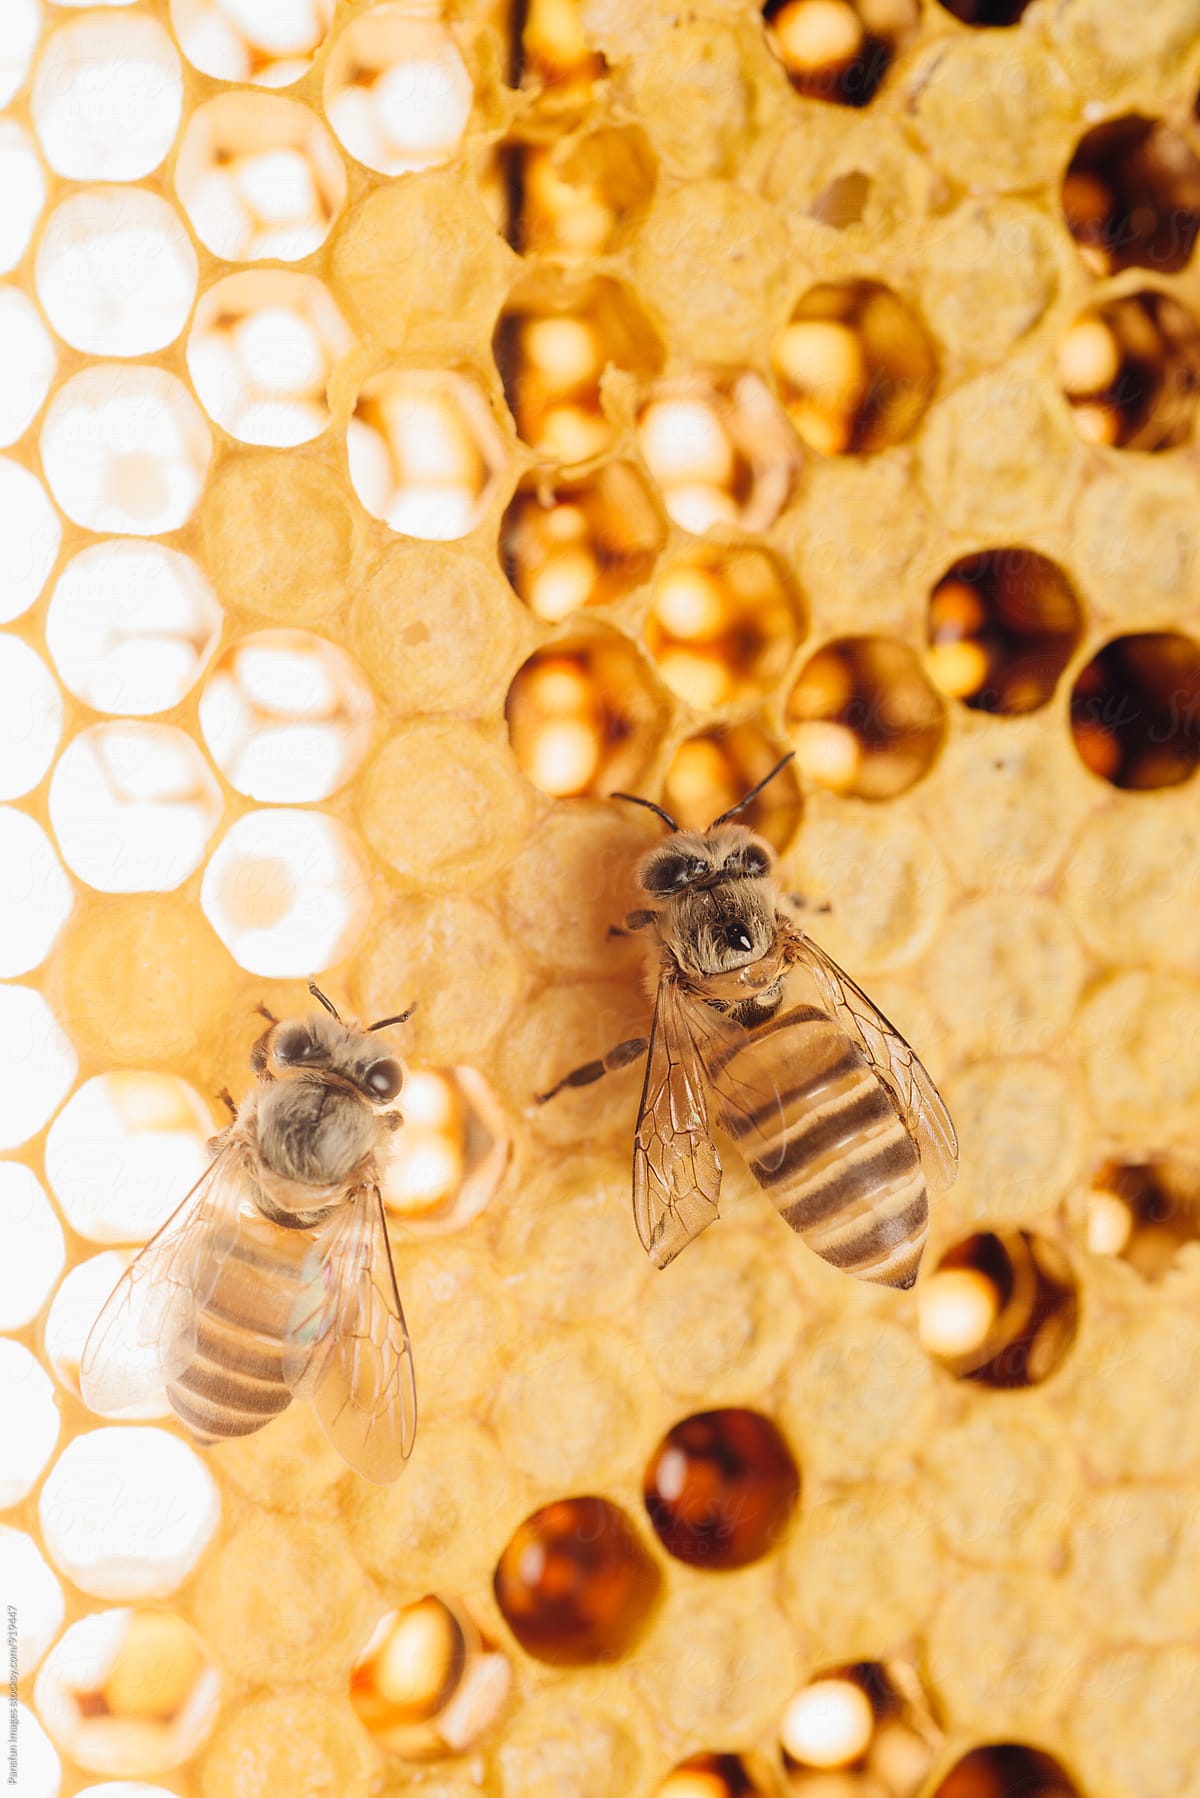 honey bee work on honeycomb